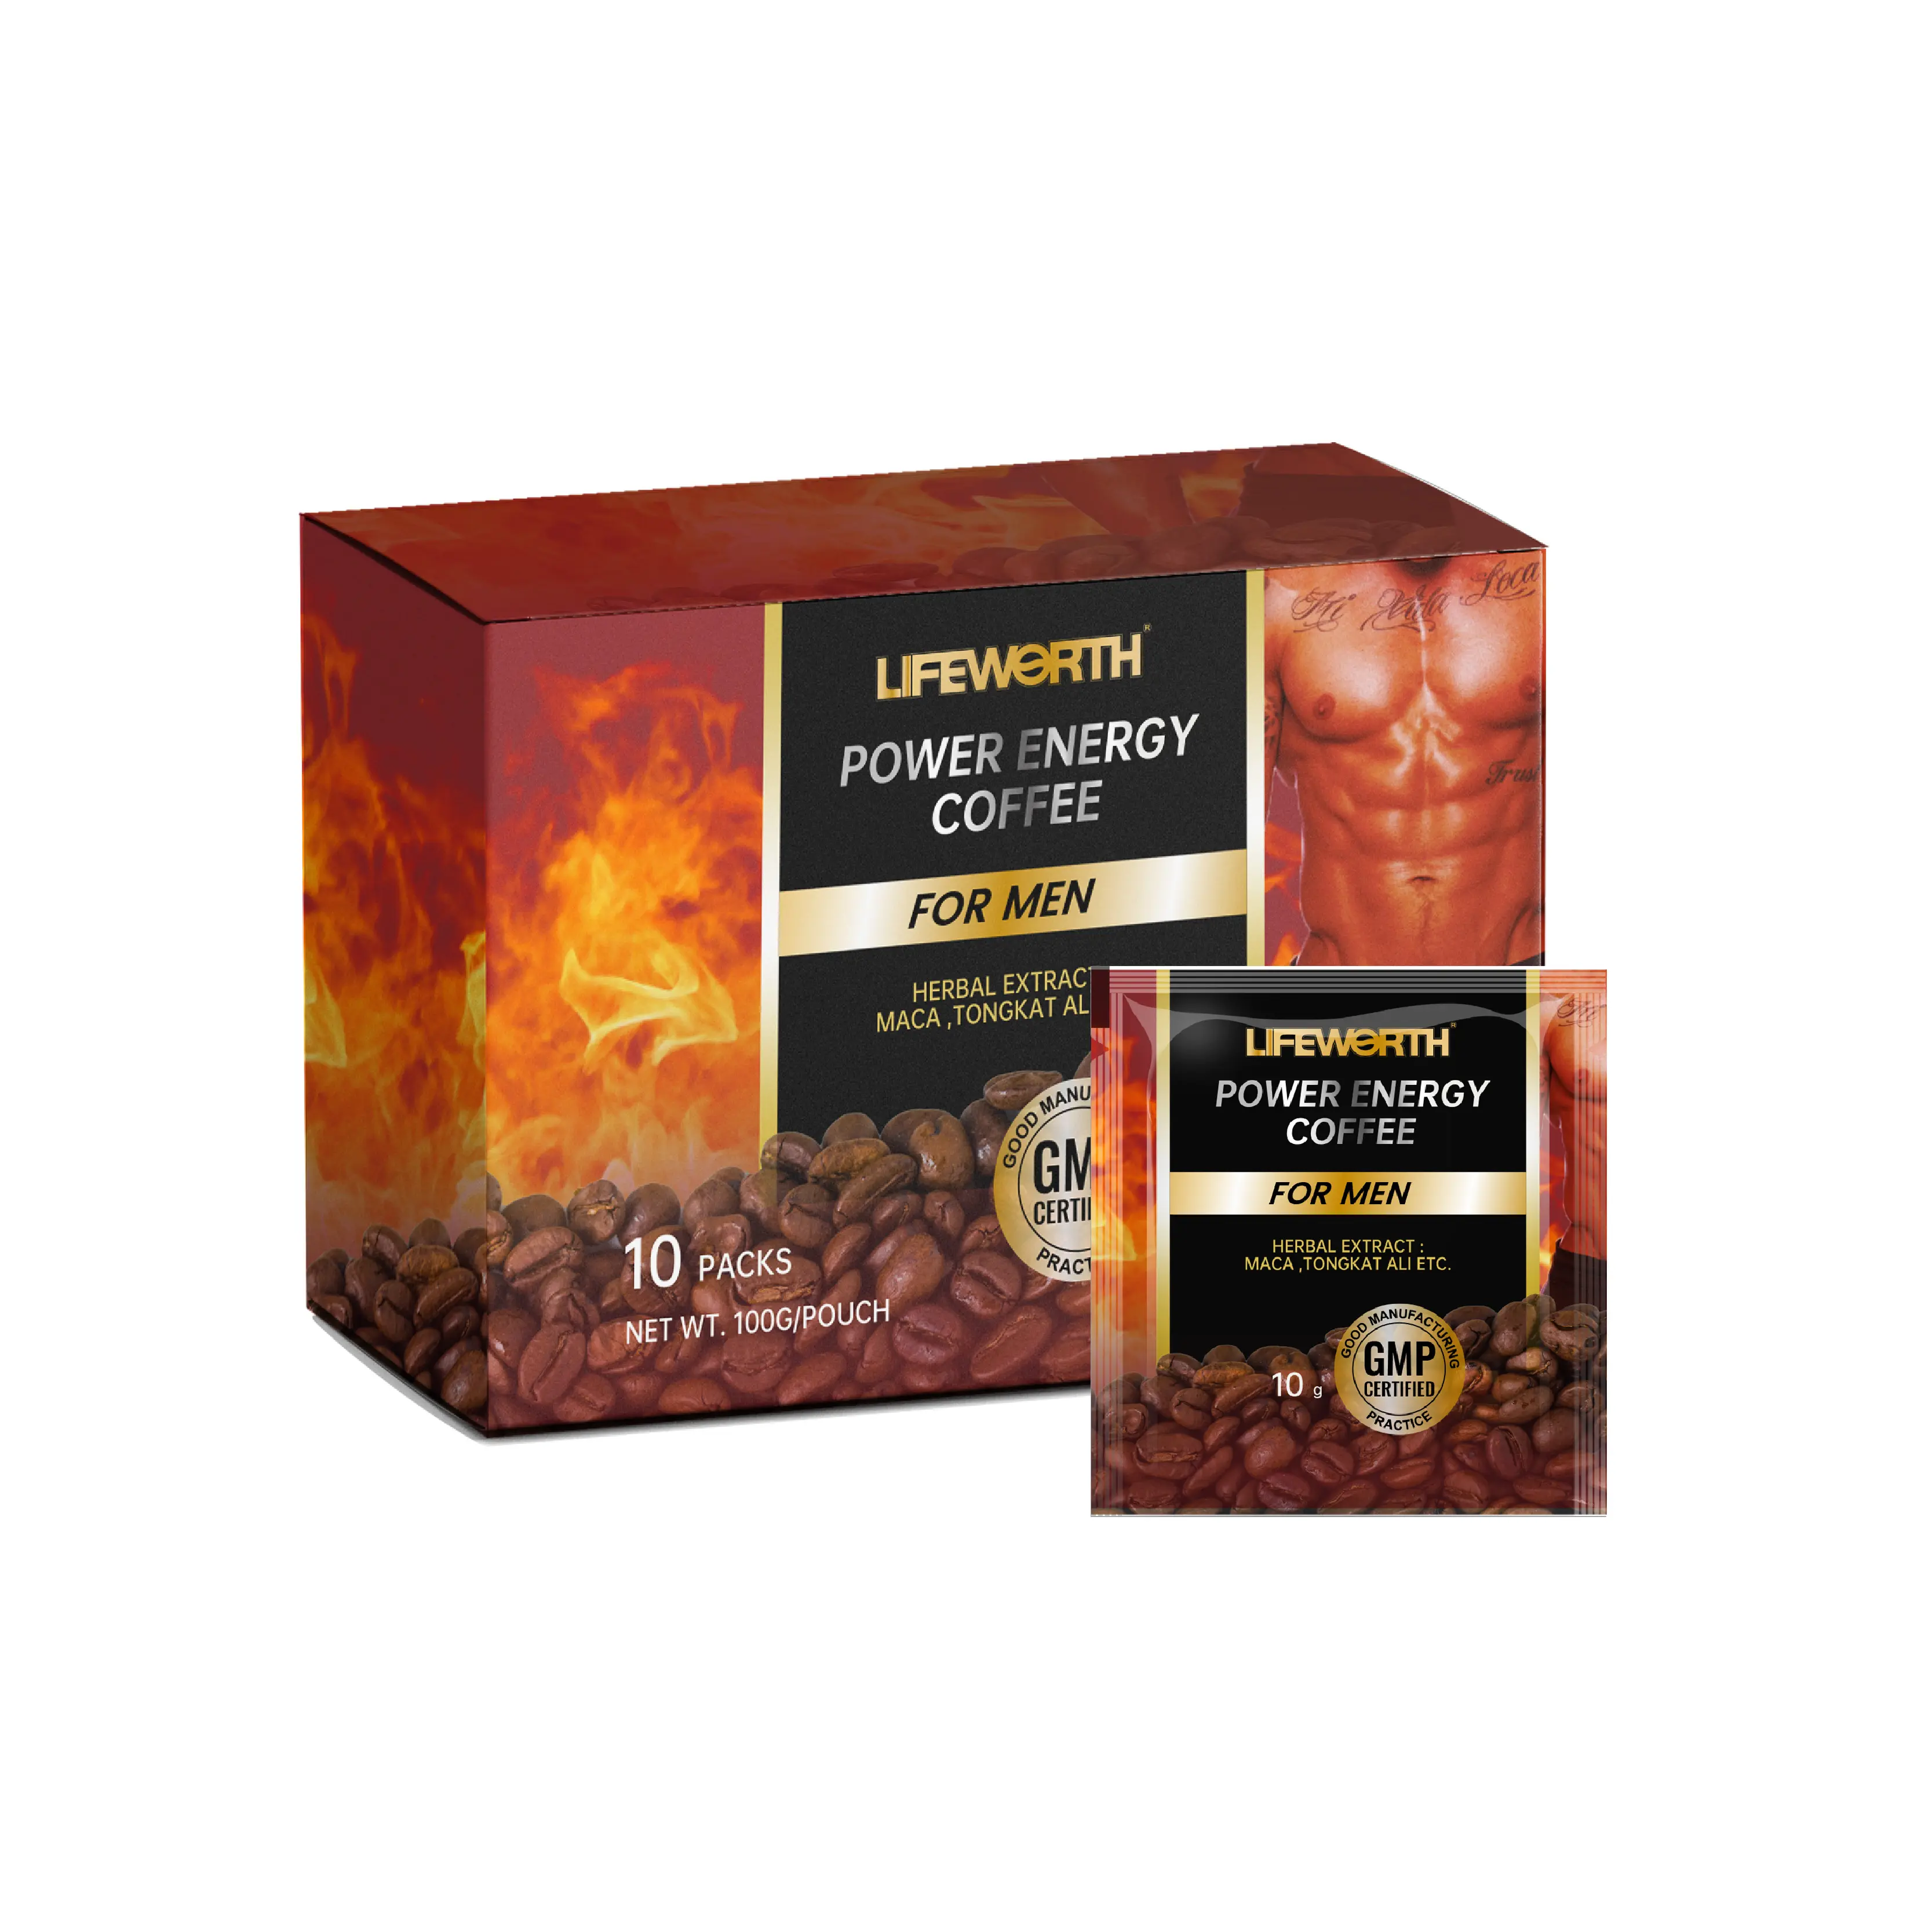 Lifeworth Man Power Energy Koffie Mannelijke Vitaliteit Gezondheid Black Instant Oyster Maca Extract Koffie